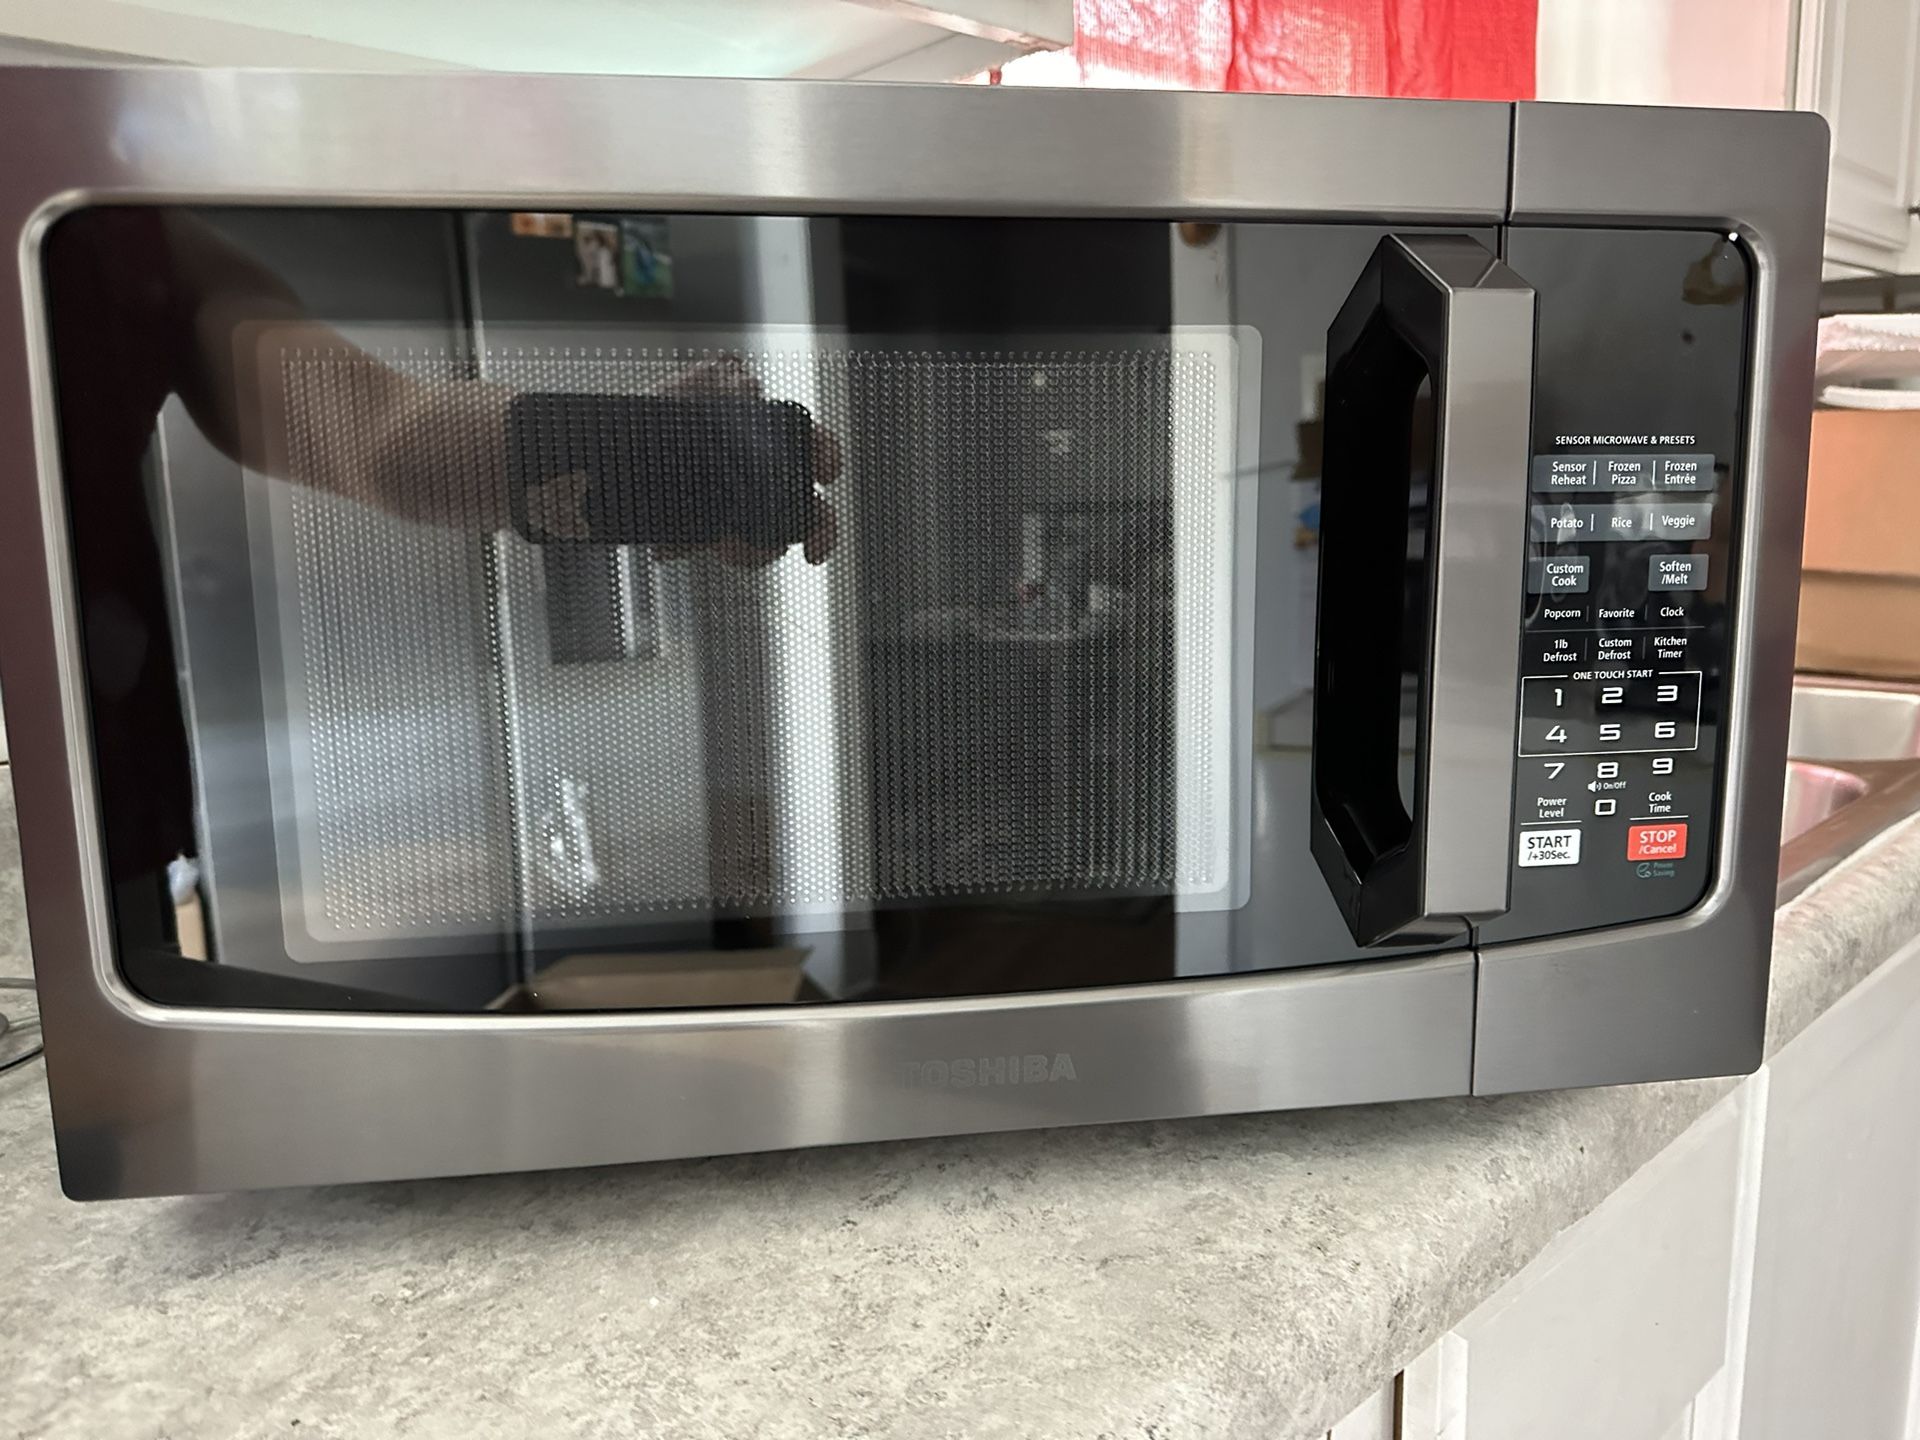 Toshiba Microwave 